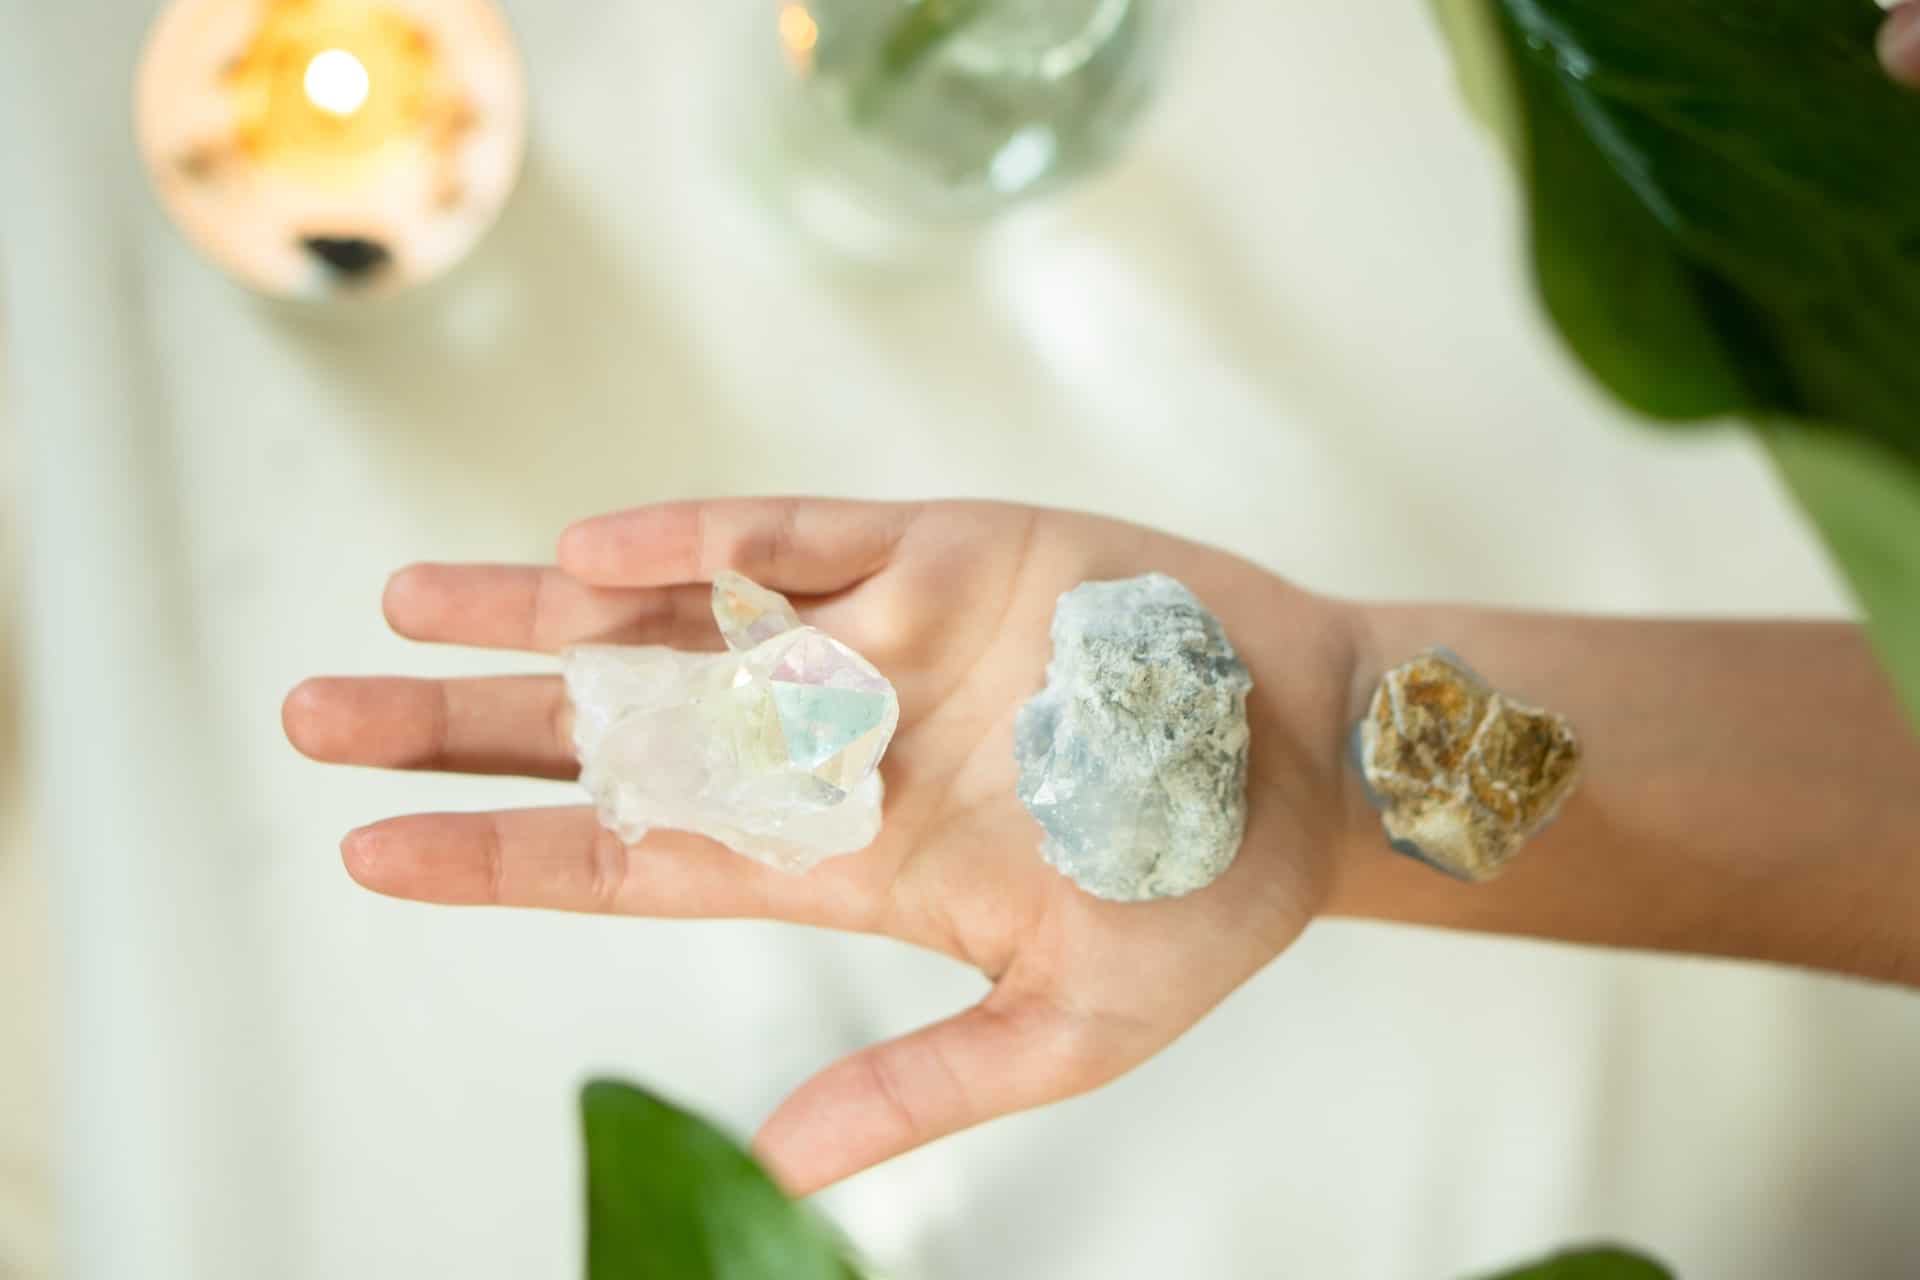 Large healing crystals